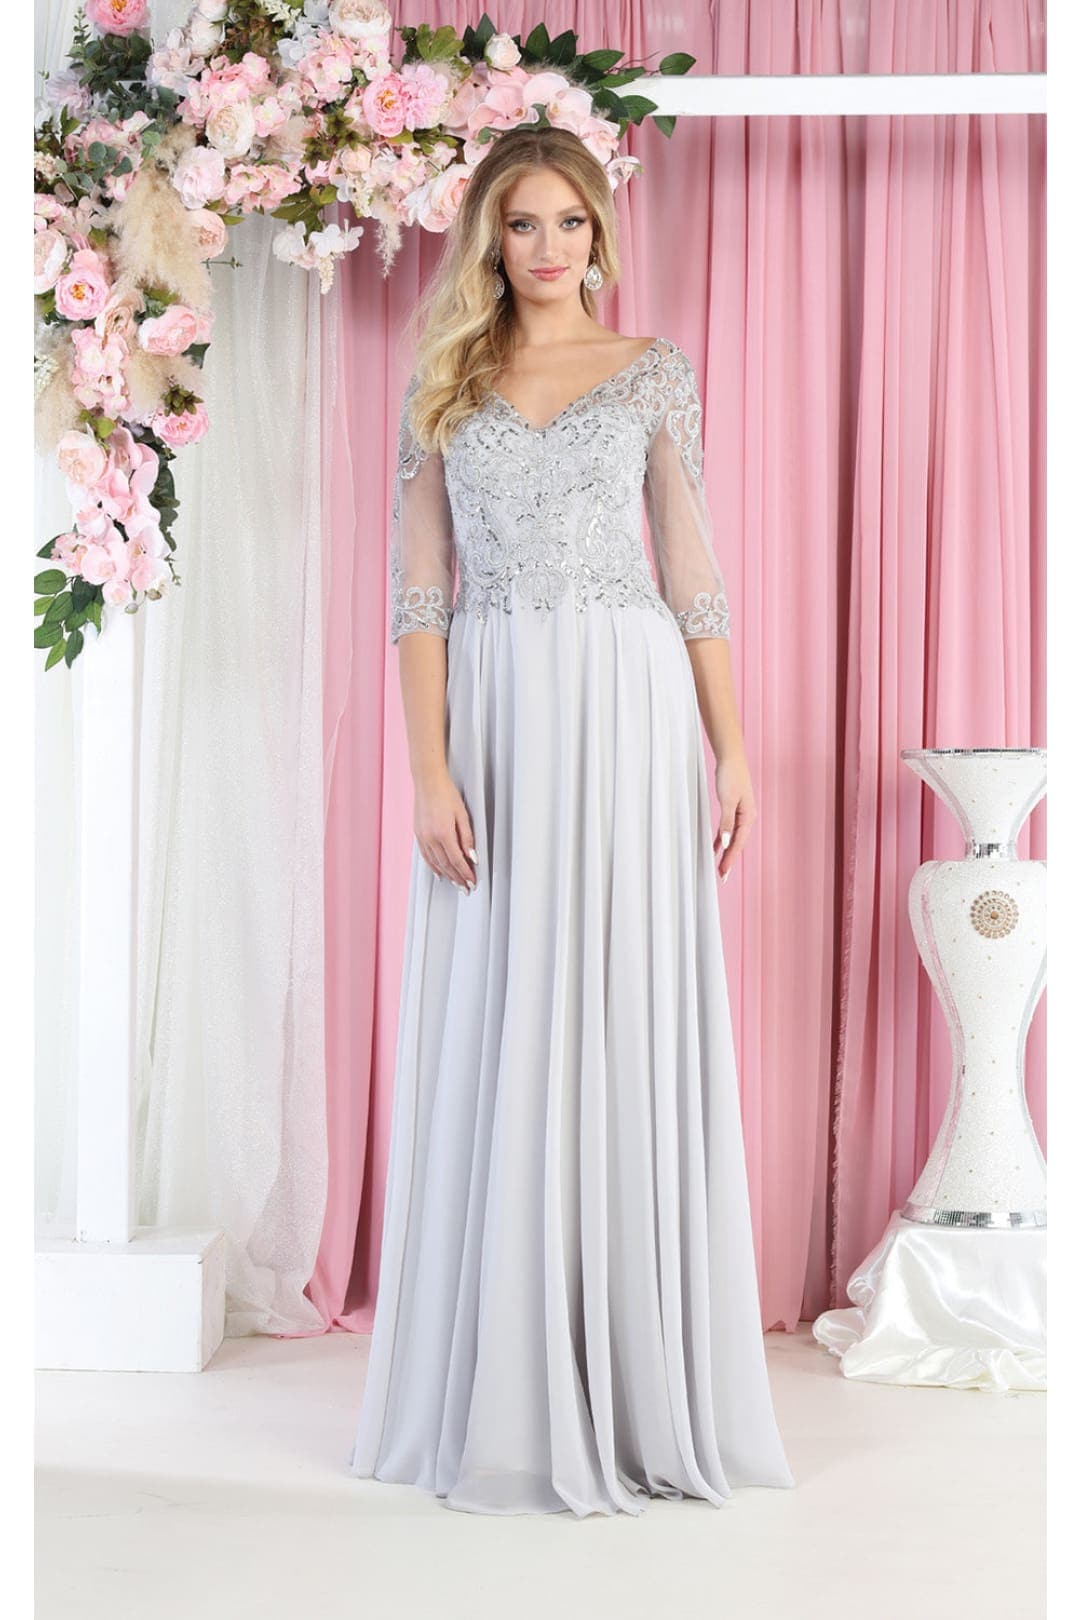 May Queen MQ1936 3/4 Sleevele A-lin Chiffon Dress - Dresses